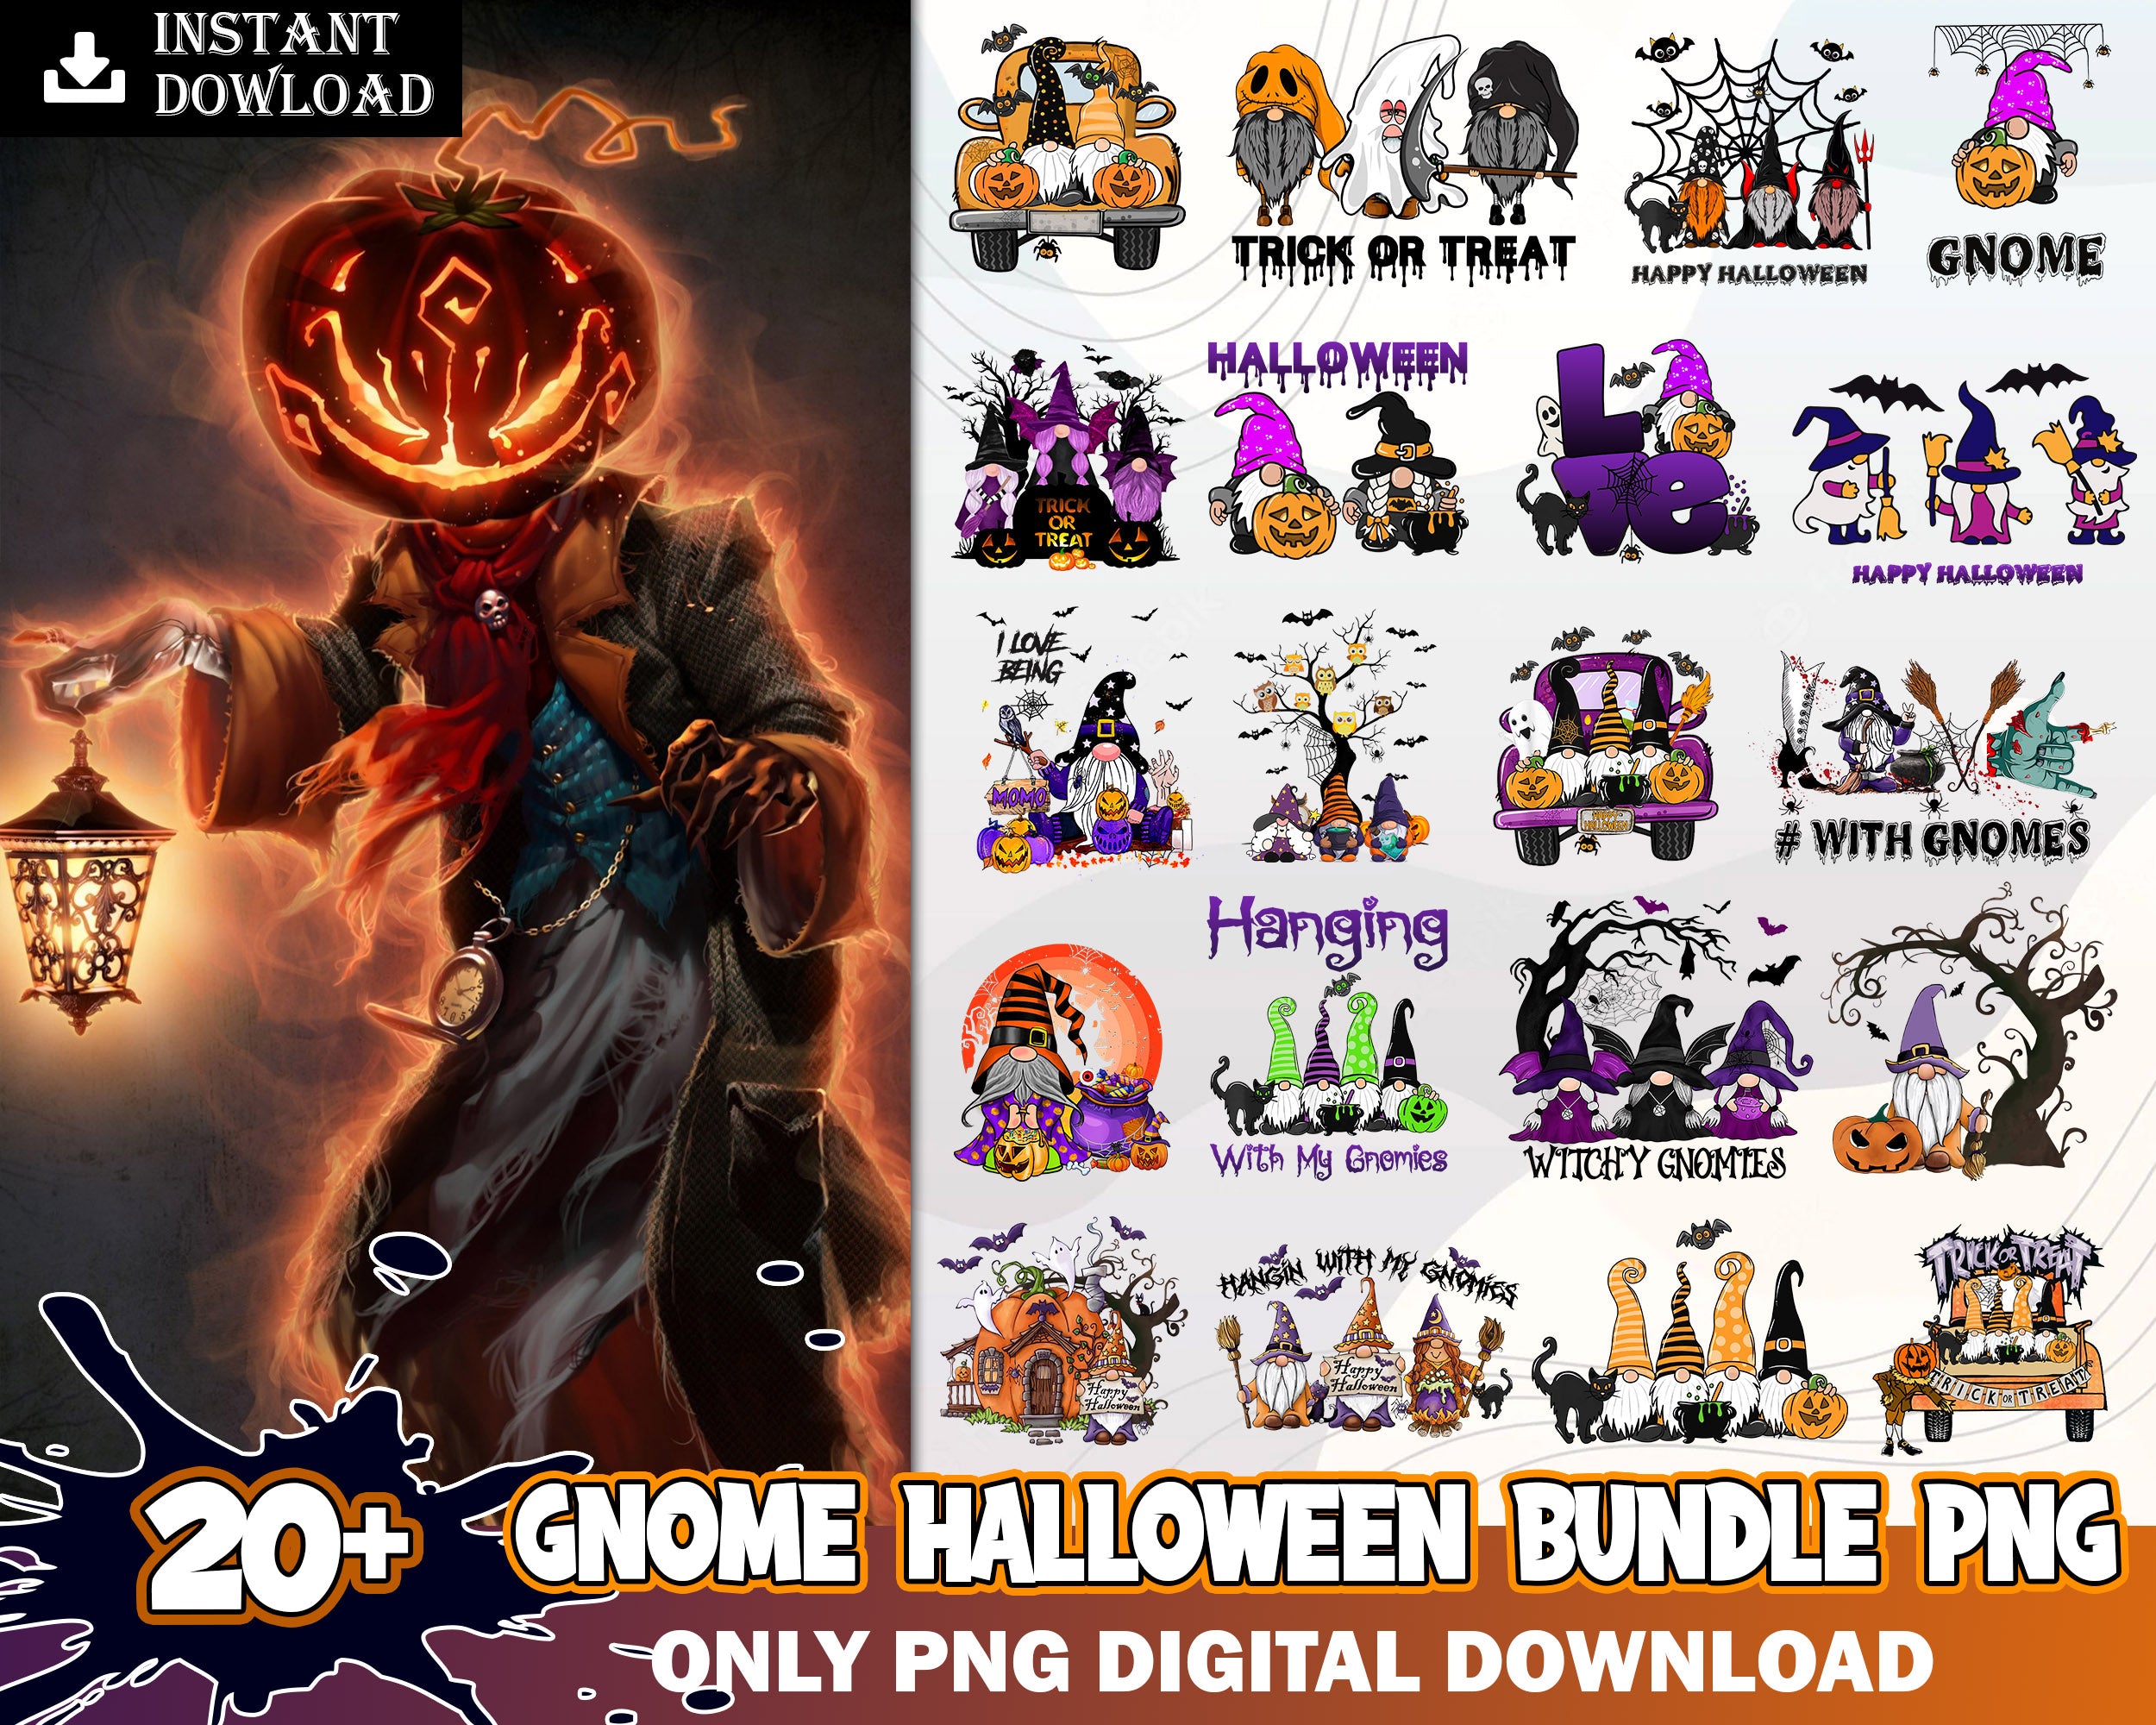 Gnome Halloween bundle png, Halloween ghouls PNG, images, Digital file, Instant download